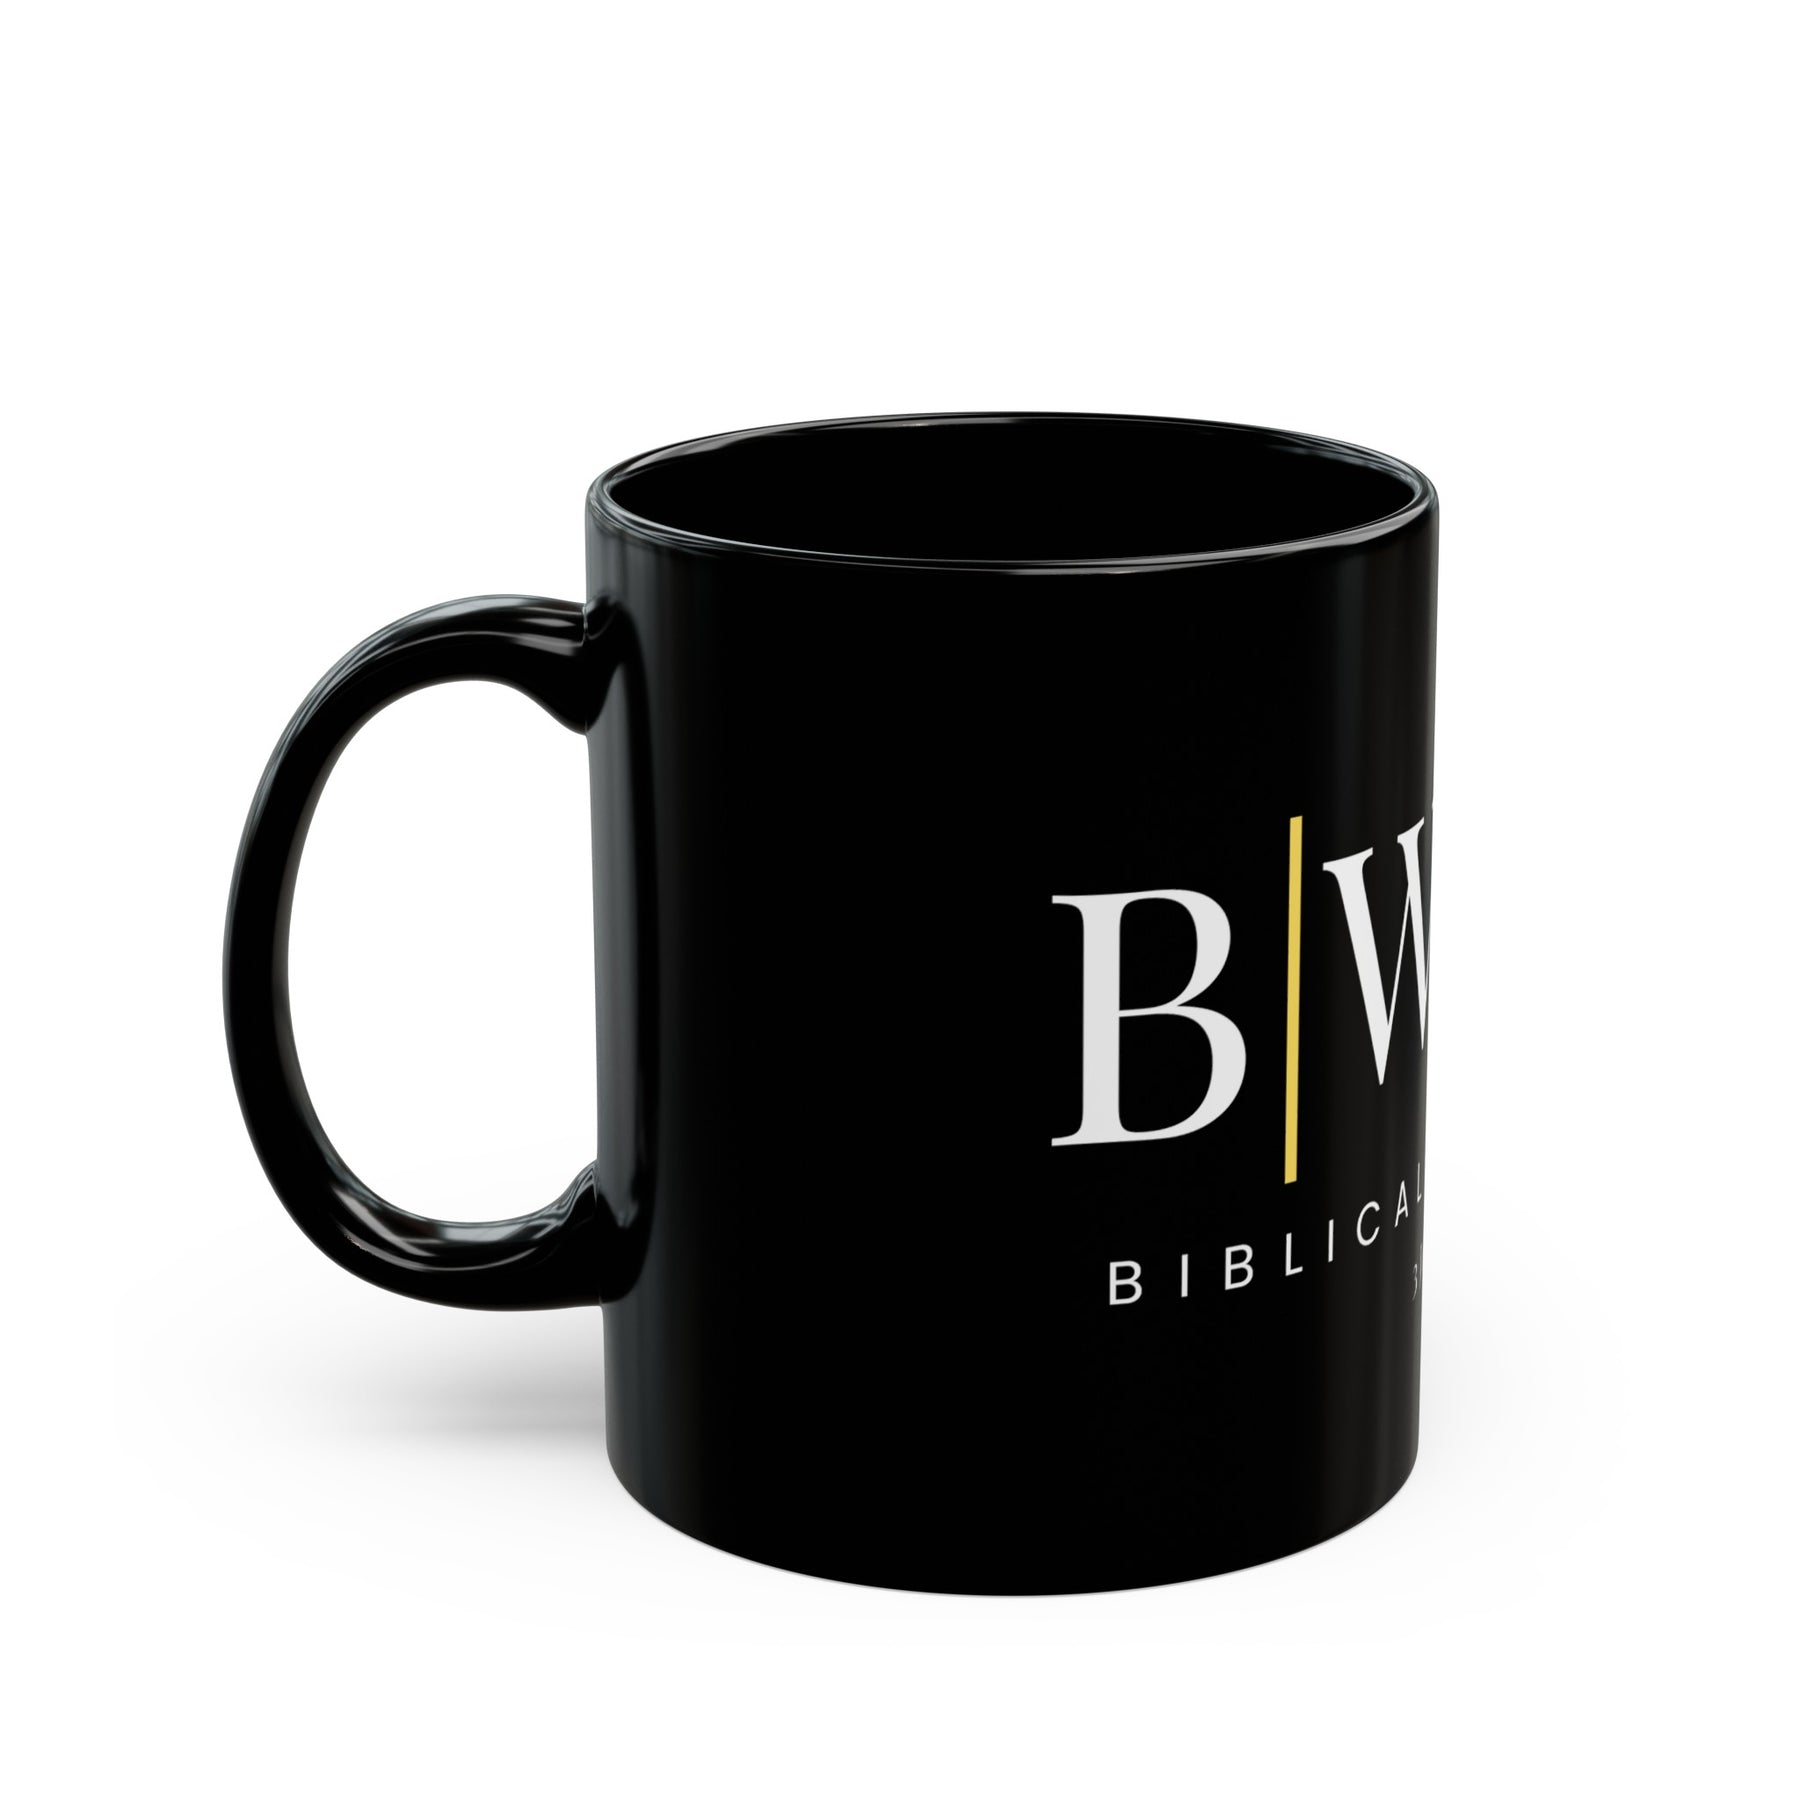 The B|TEA Mug by B|WELL